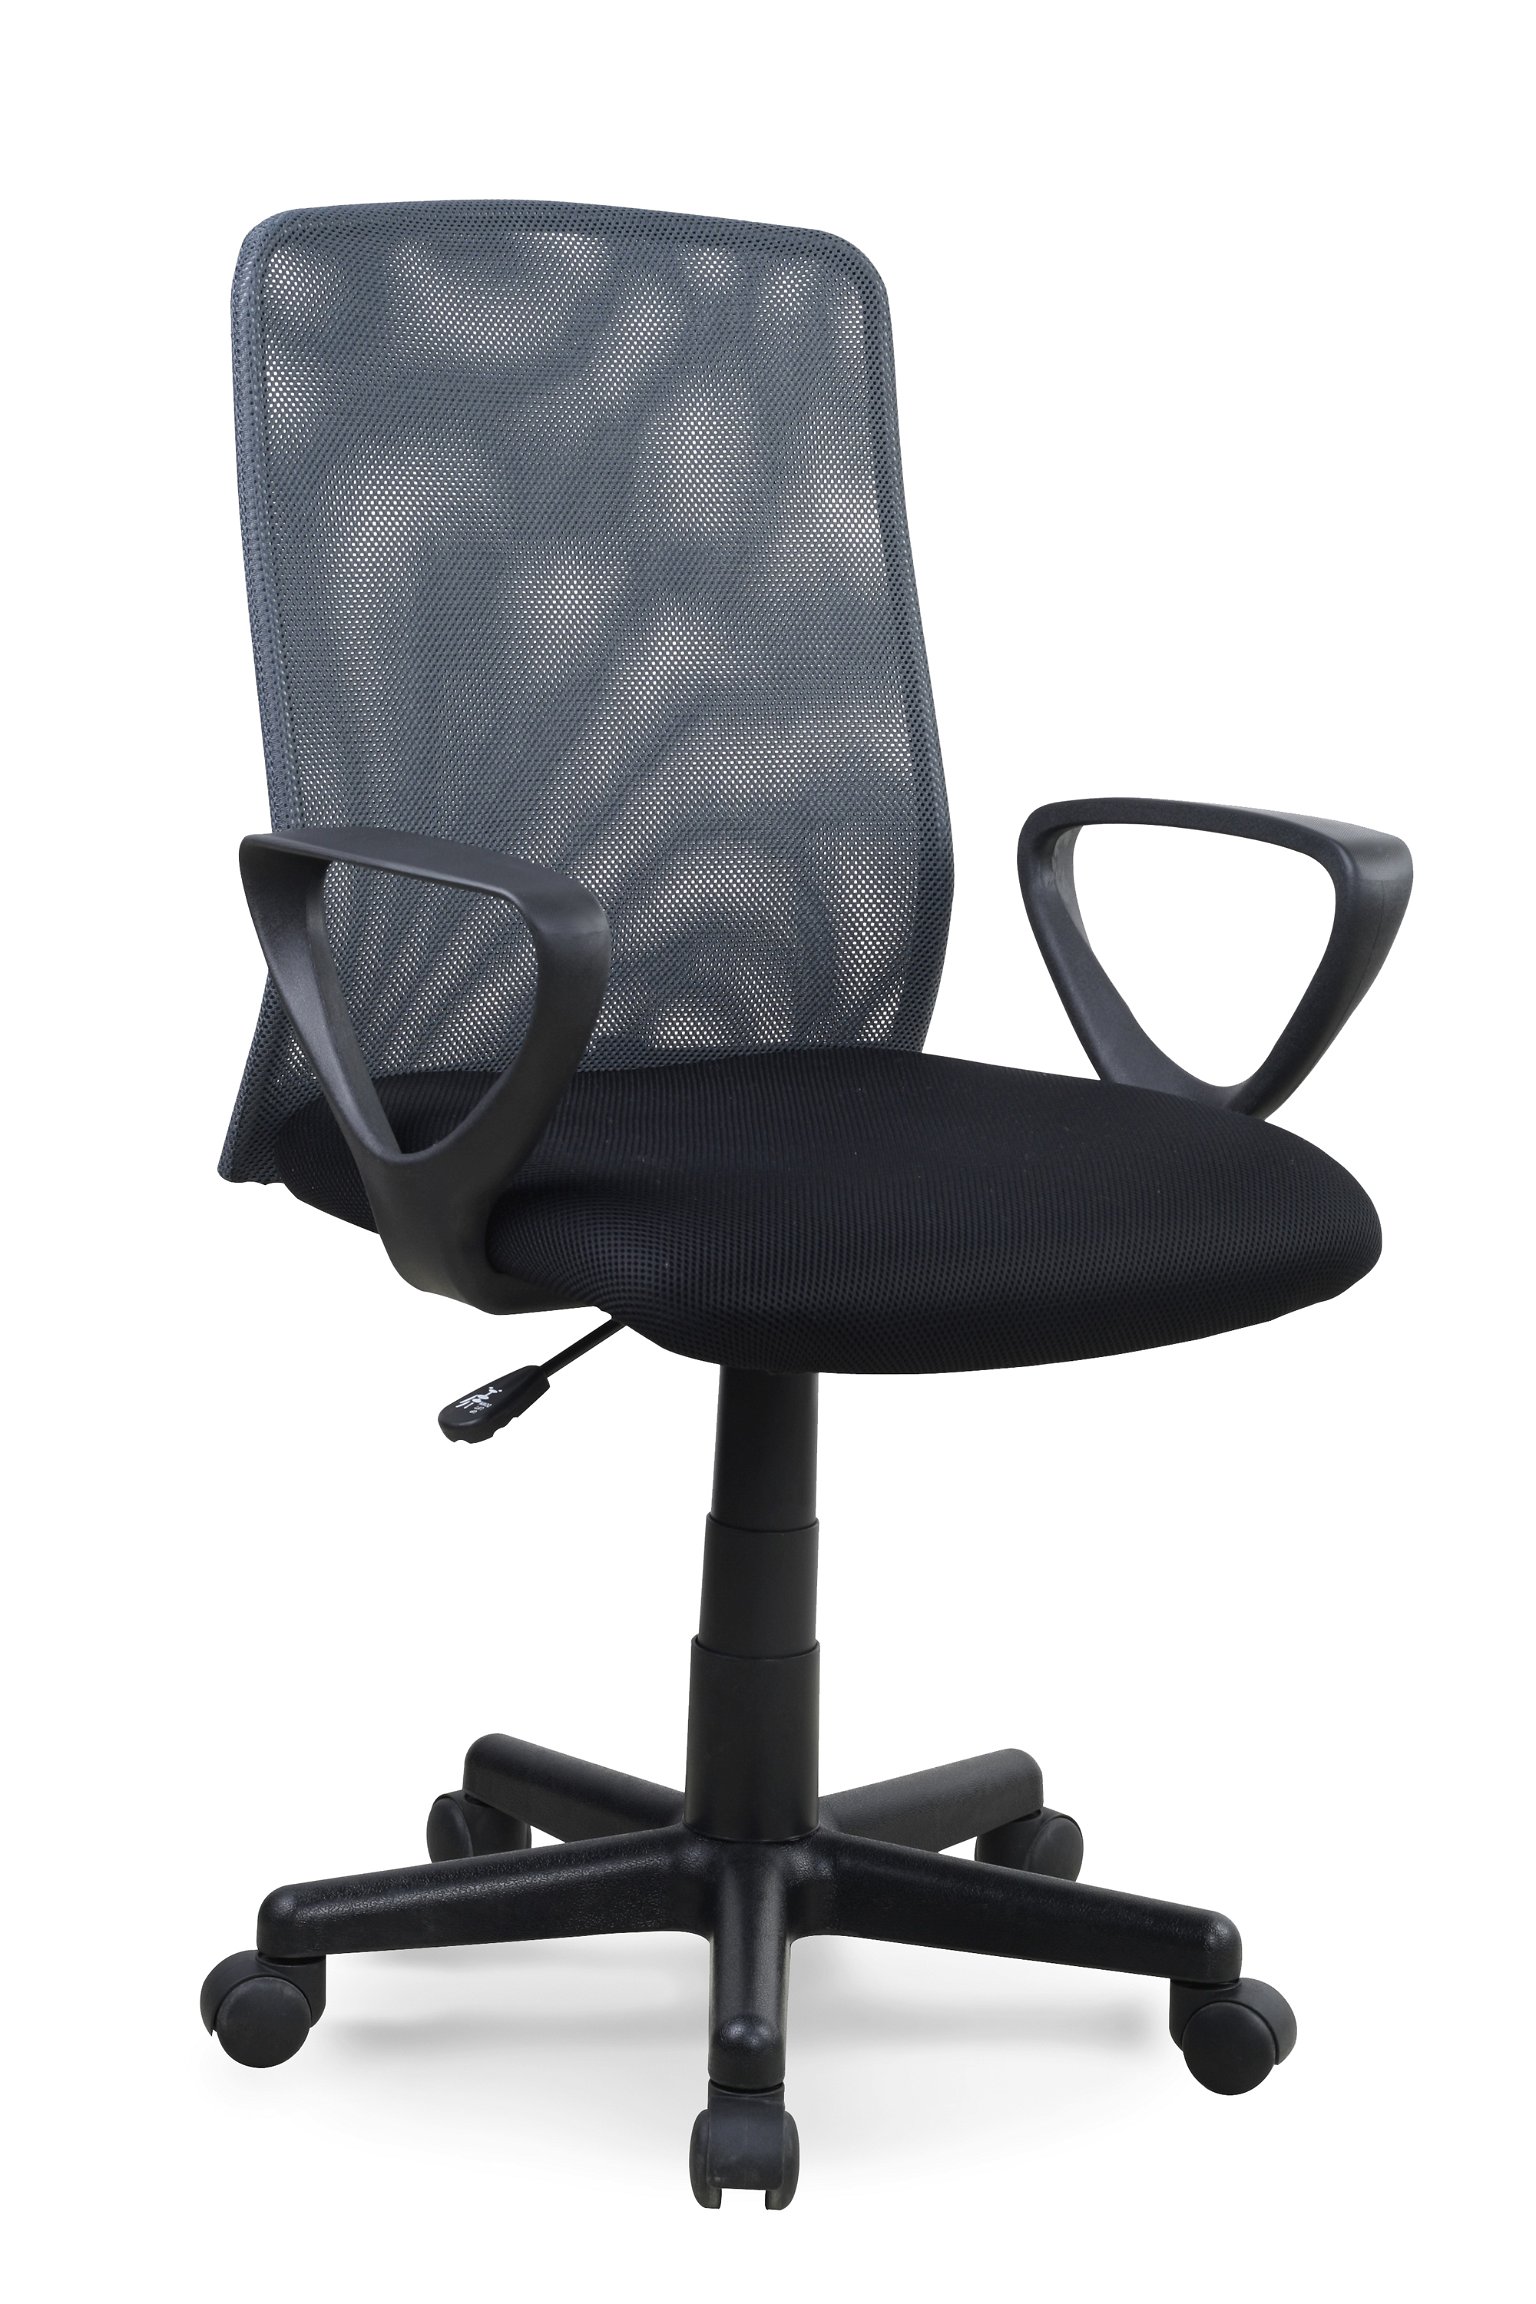 Biuro kėdė ALEX, juoda/pilka